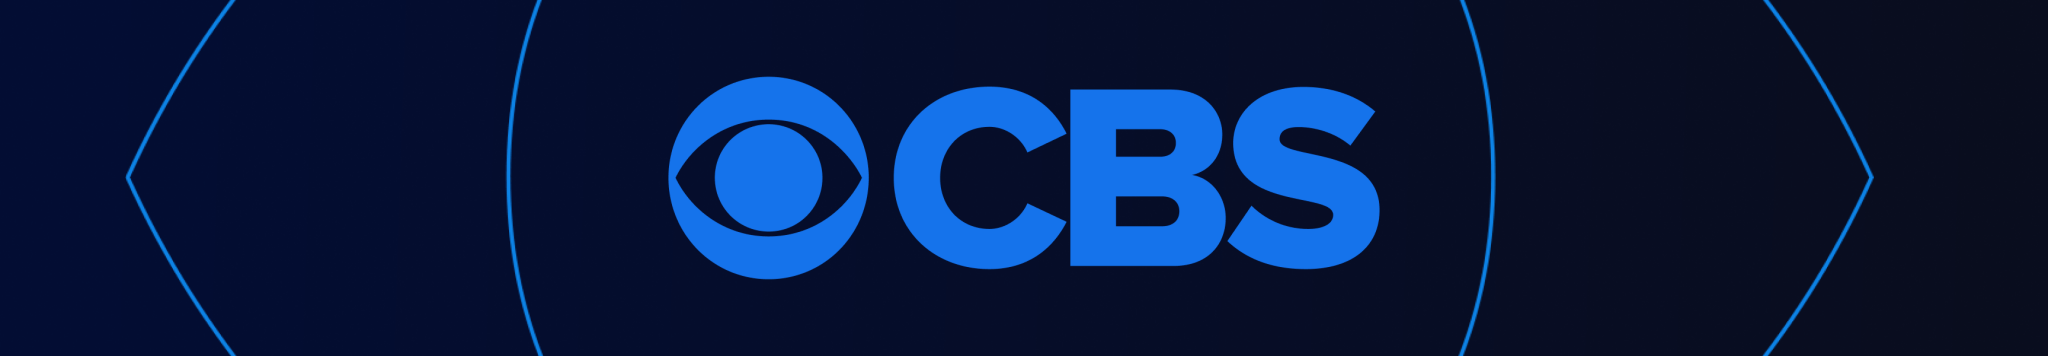 CBS Entertainment Clothing